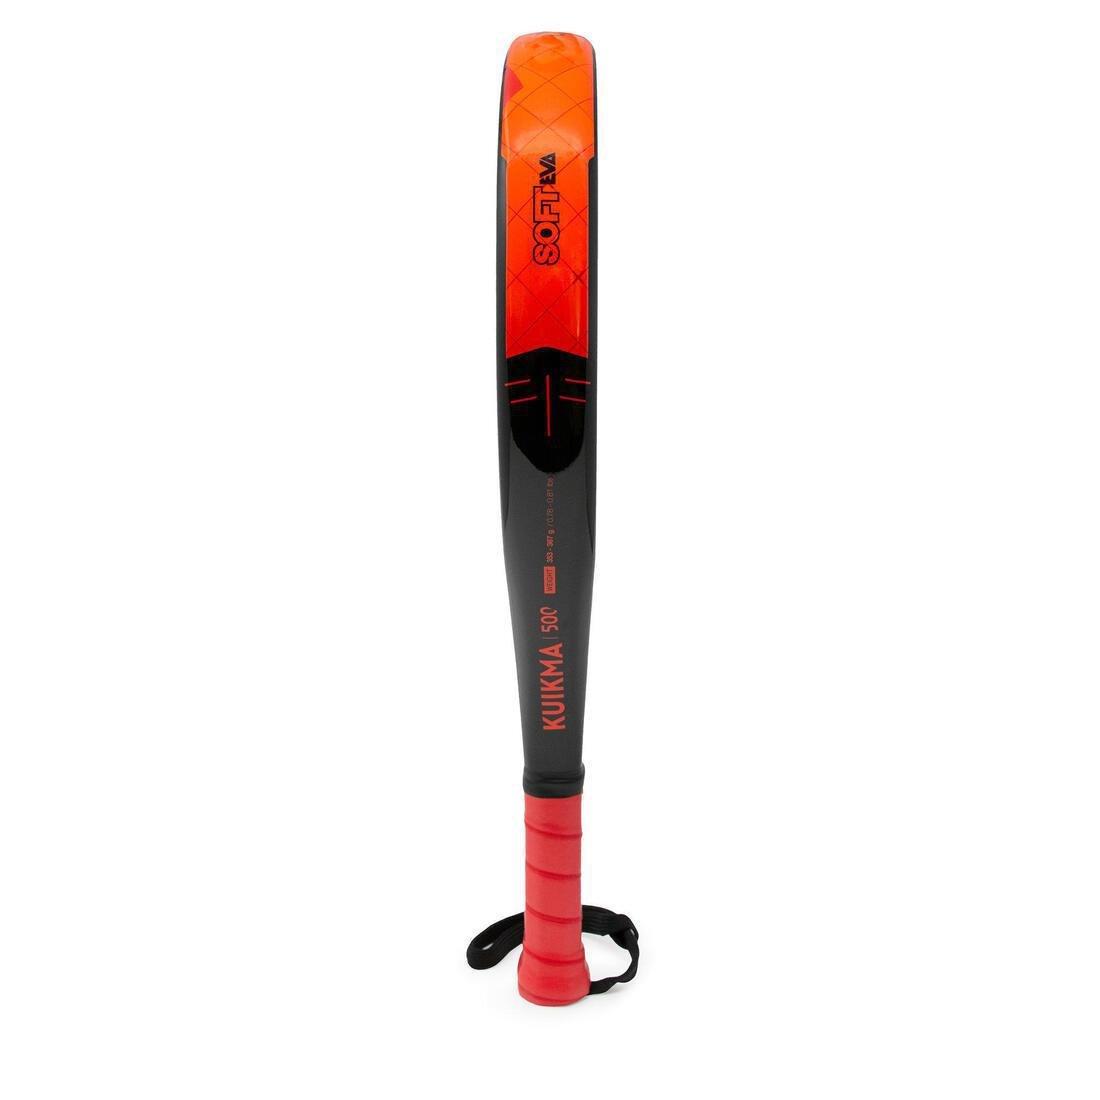 KUIKMA - Adult Padel Racket Pr 500, Red